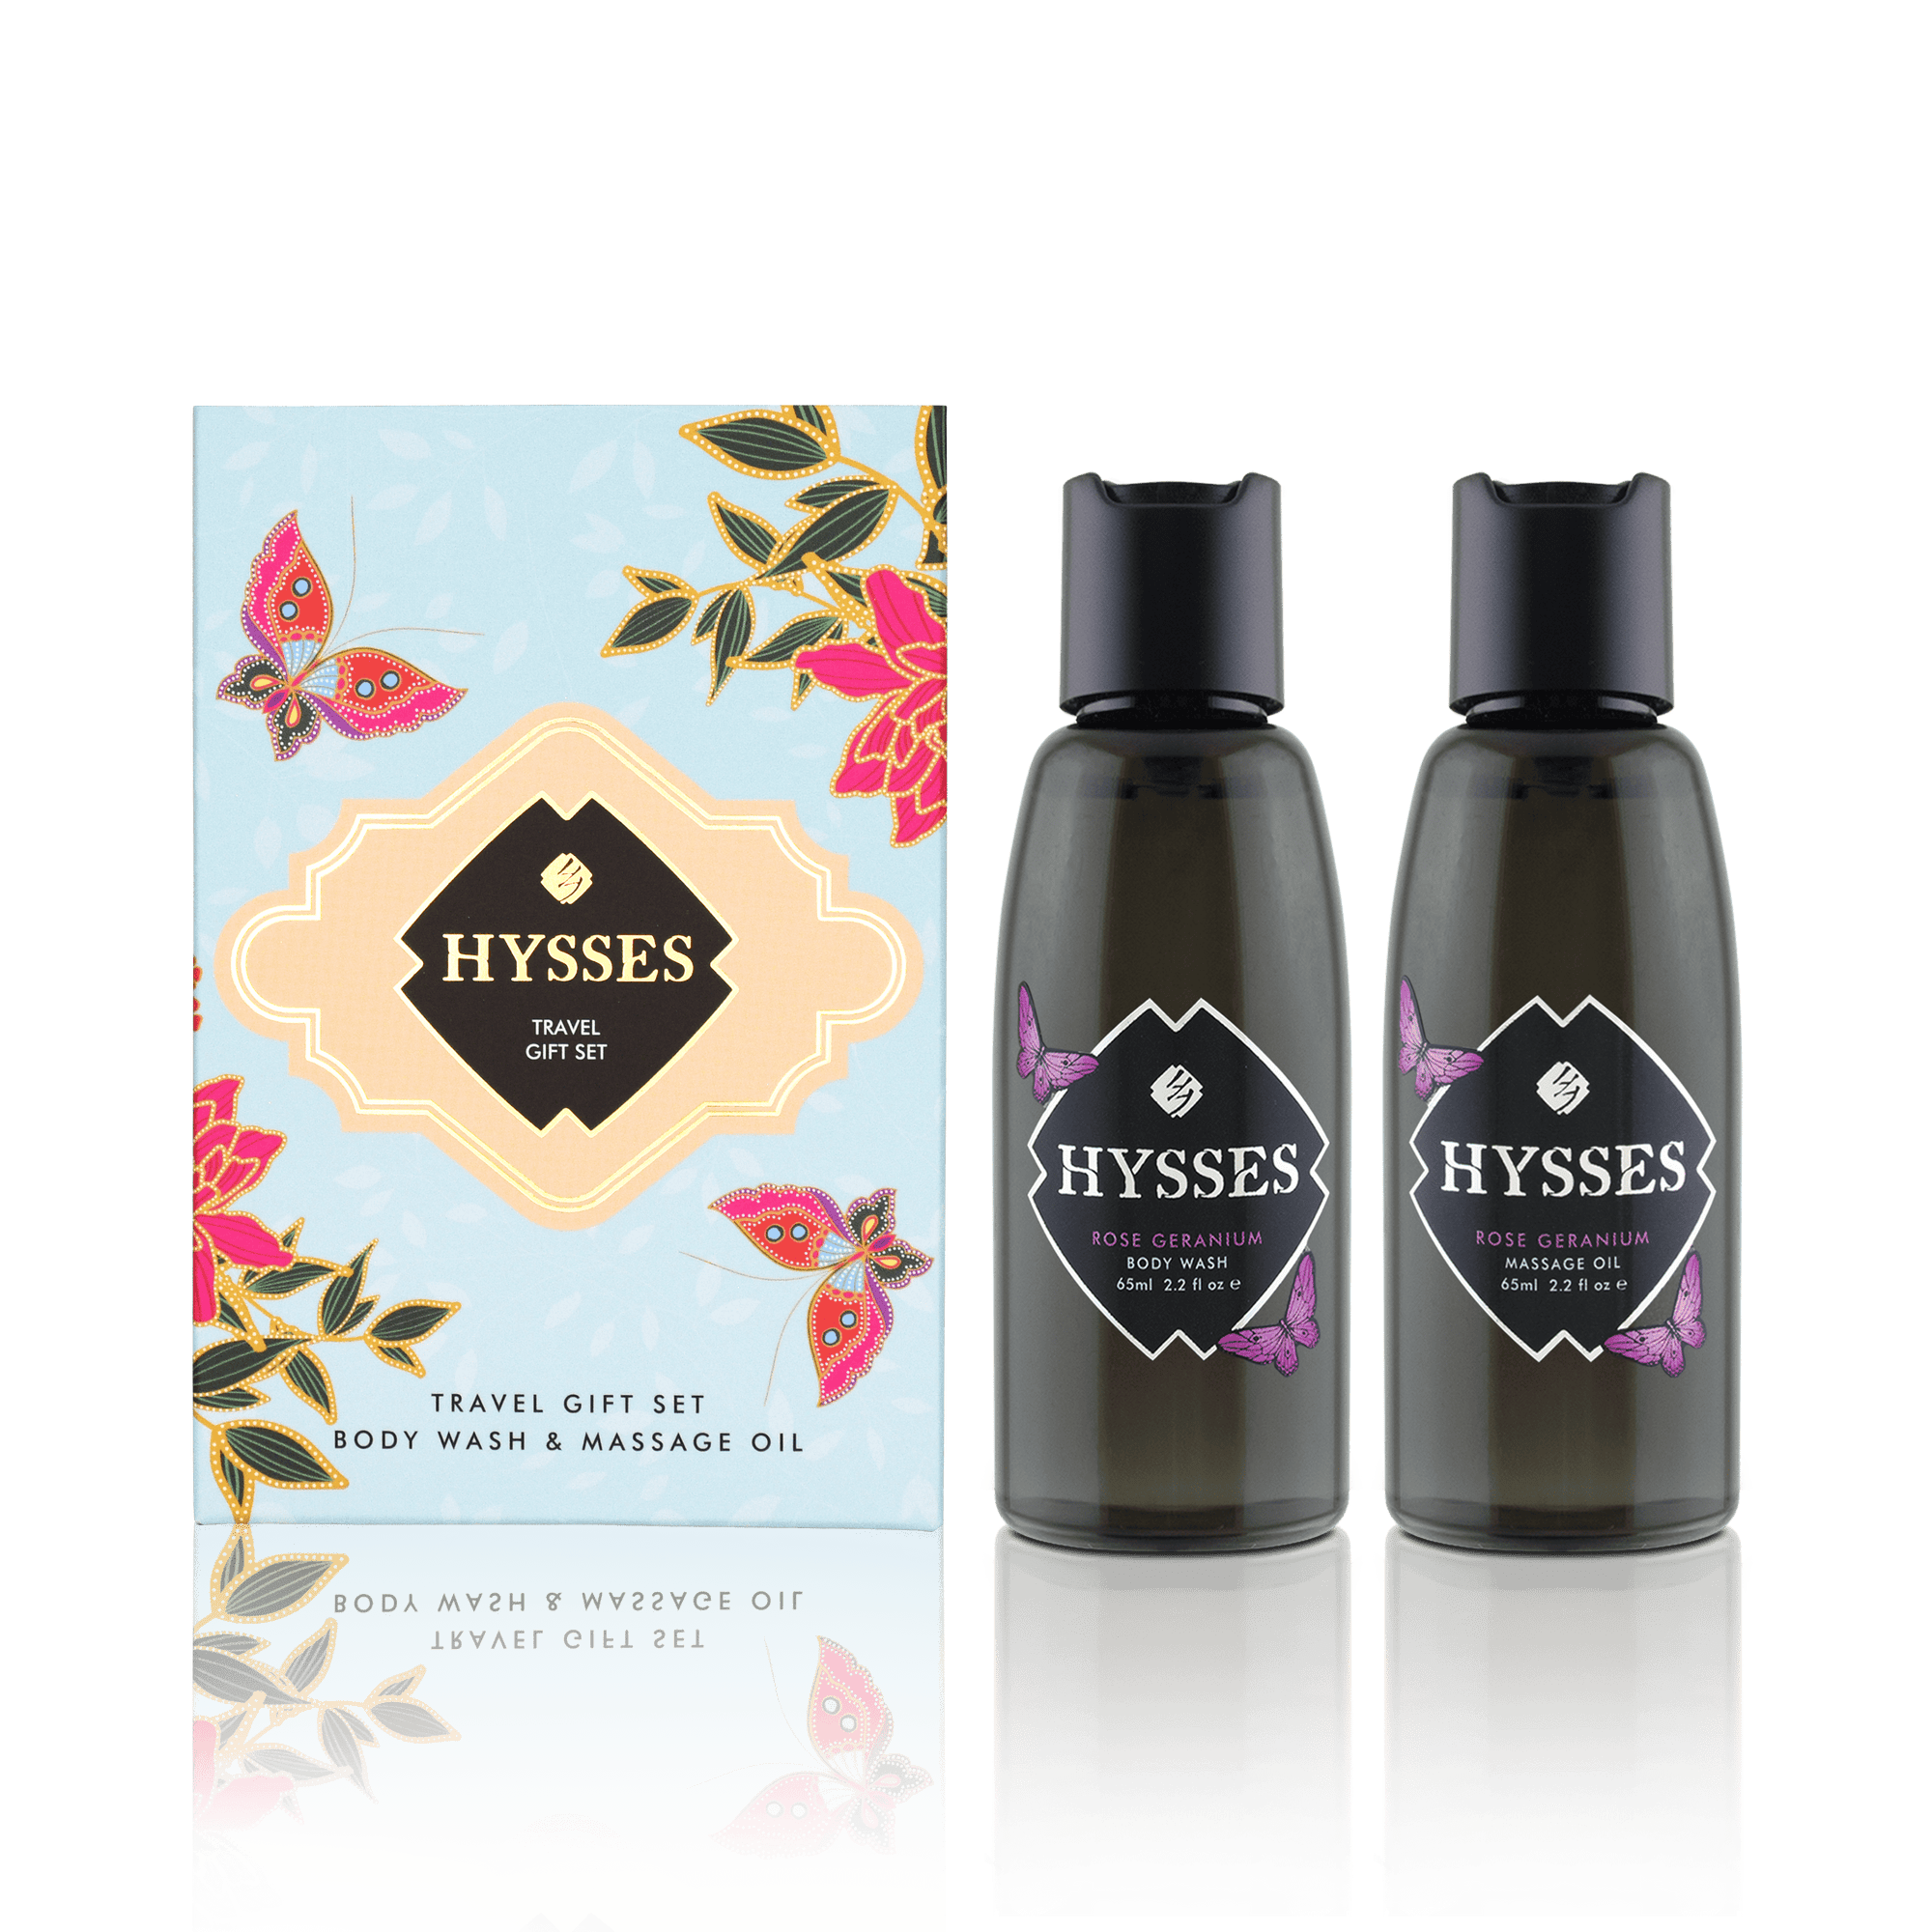 Hysses Body Care Travel Gift Set (Body Wash & Massage Oil) Rose Geranium, 65ml